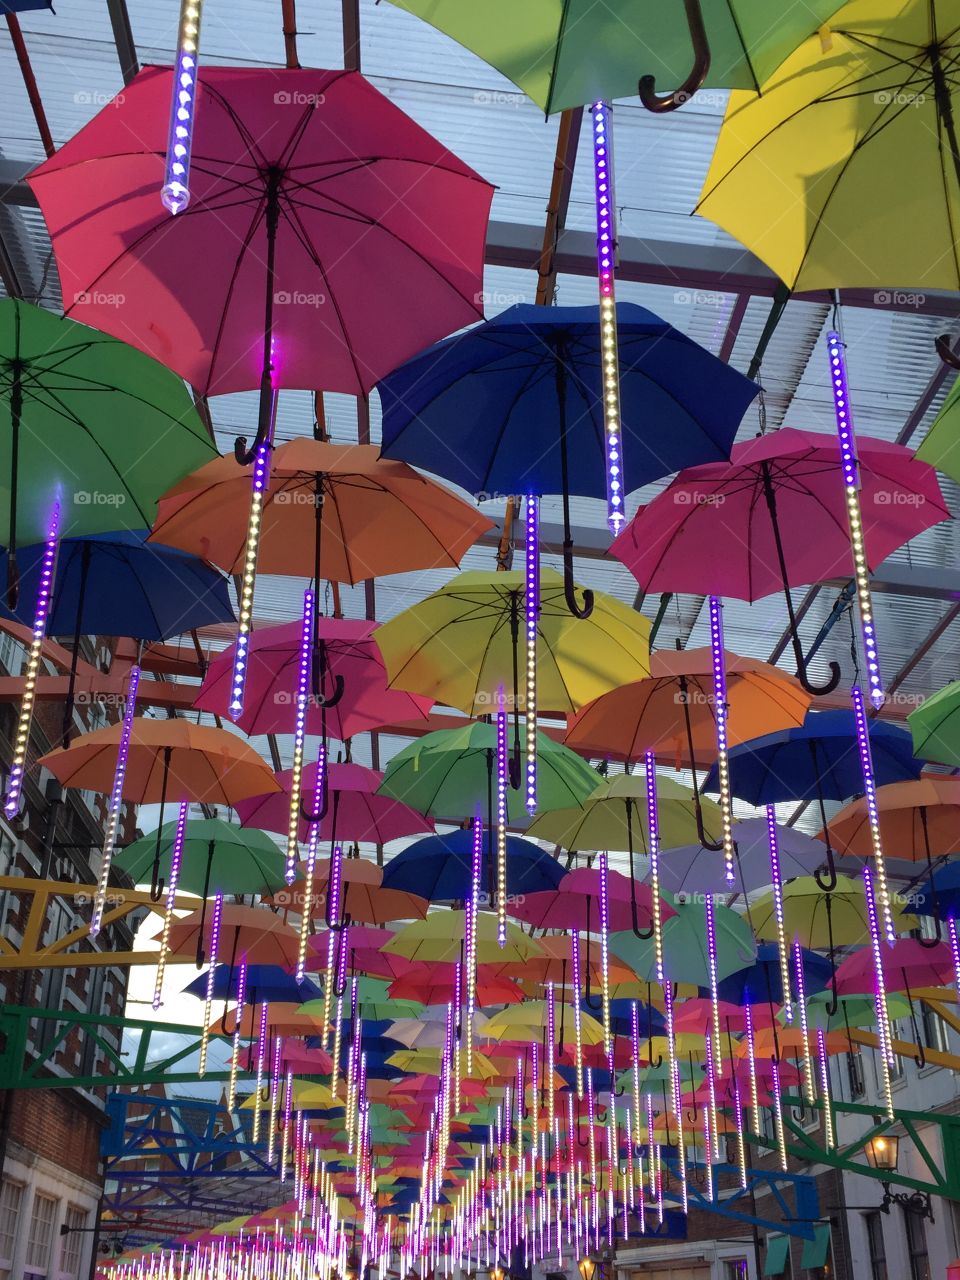 Umbrella illumination